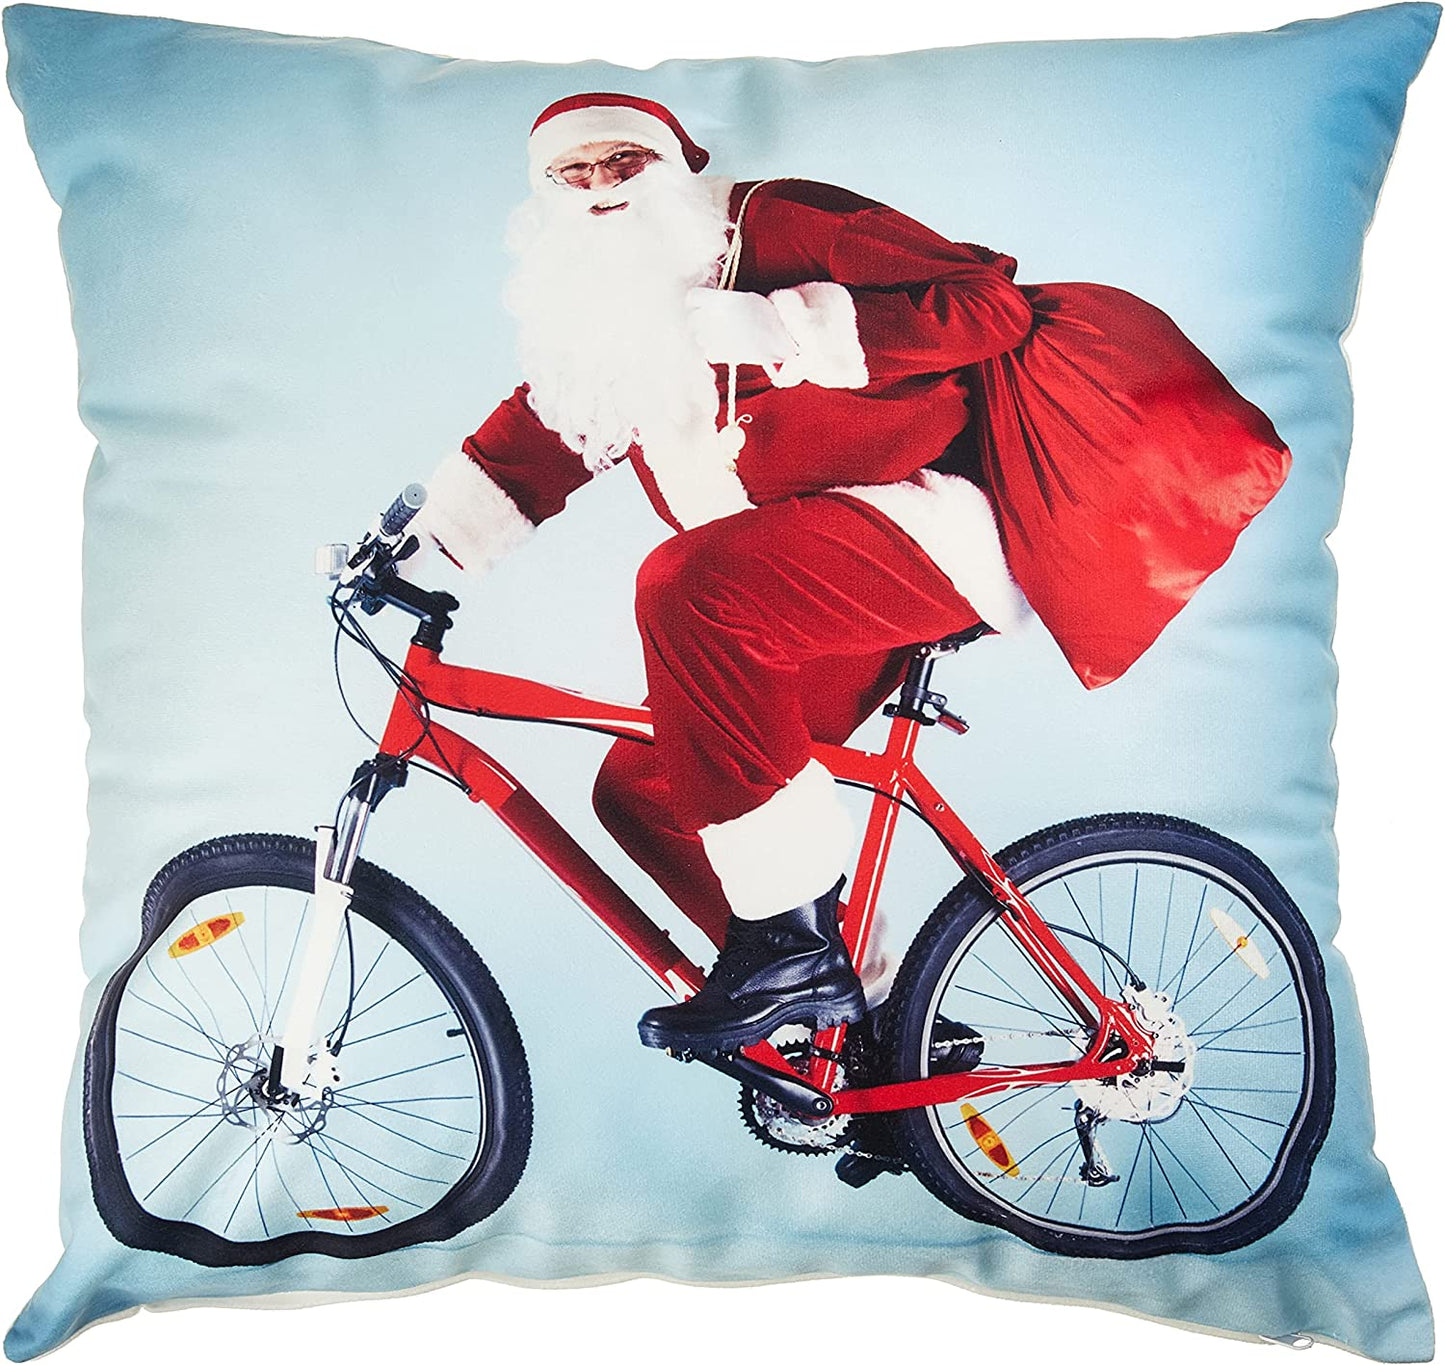 Seasonal Christmas Santa Claus Actions Pattern Decorative Accent Throw Pillow